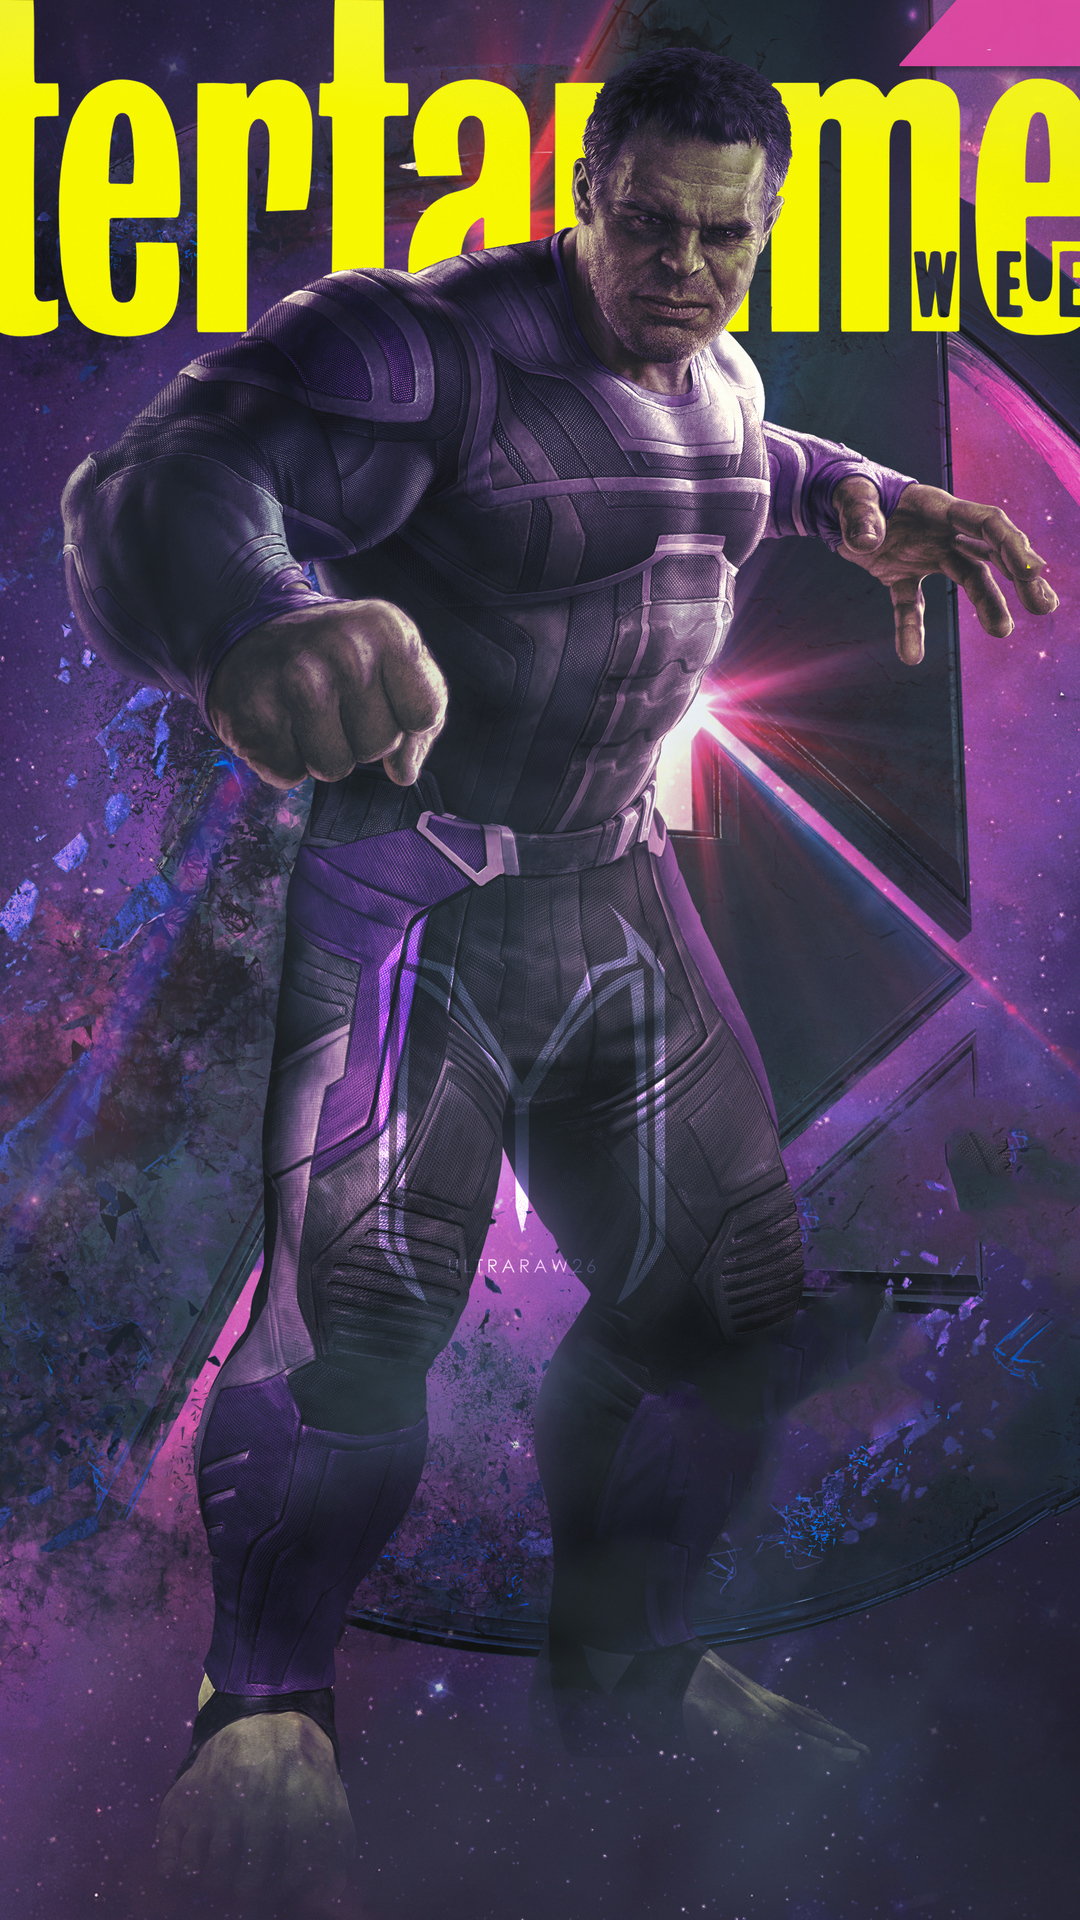 Hulk In Avengers Endgame 2019 Entertainment Weekly iPhone